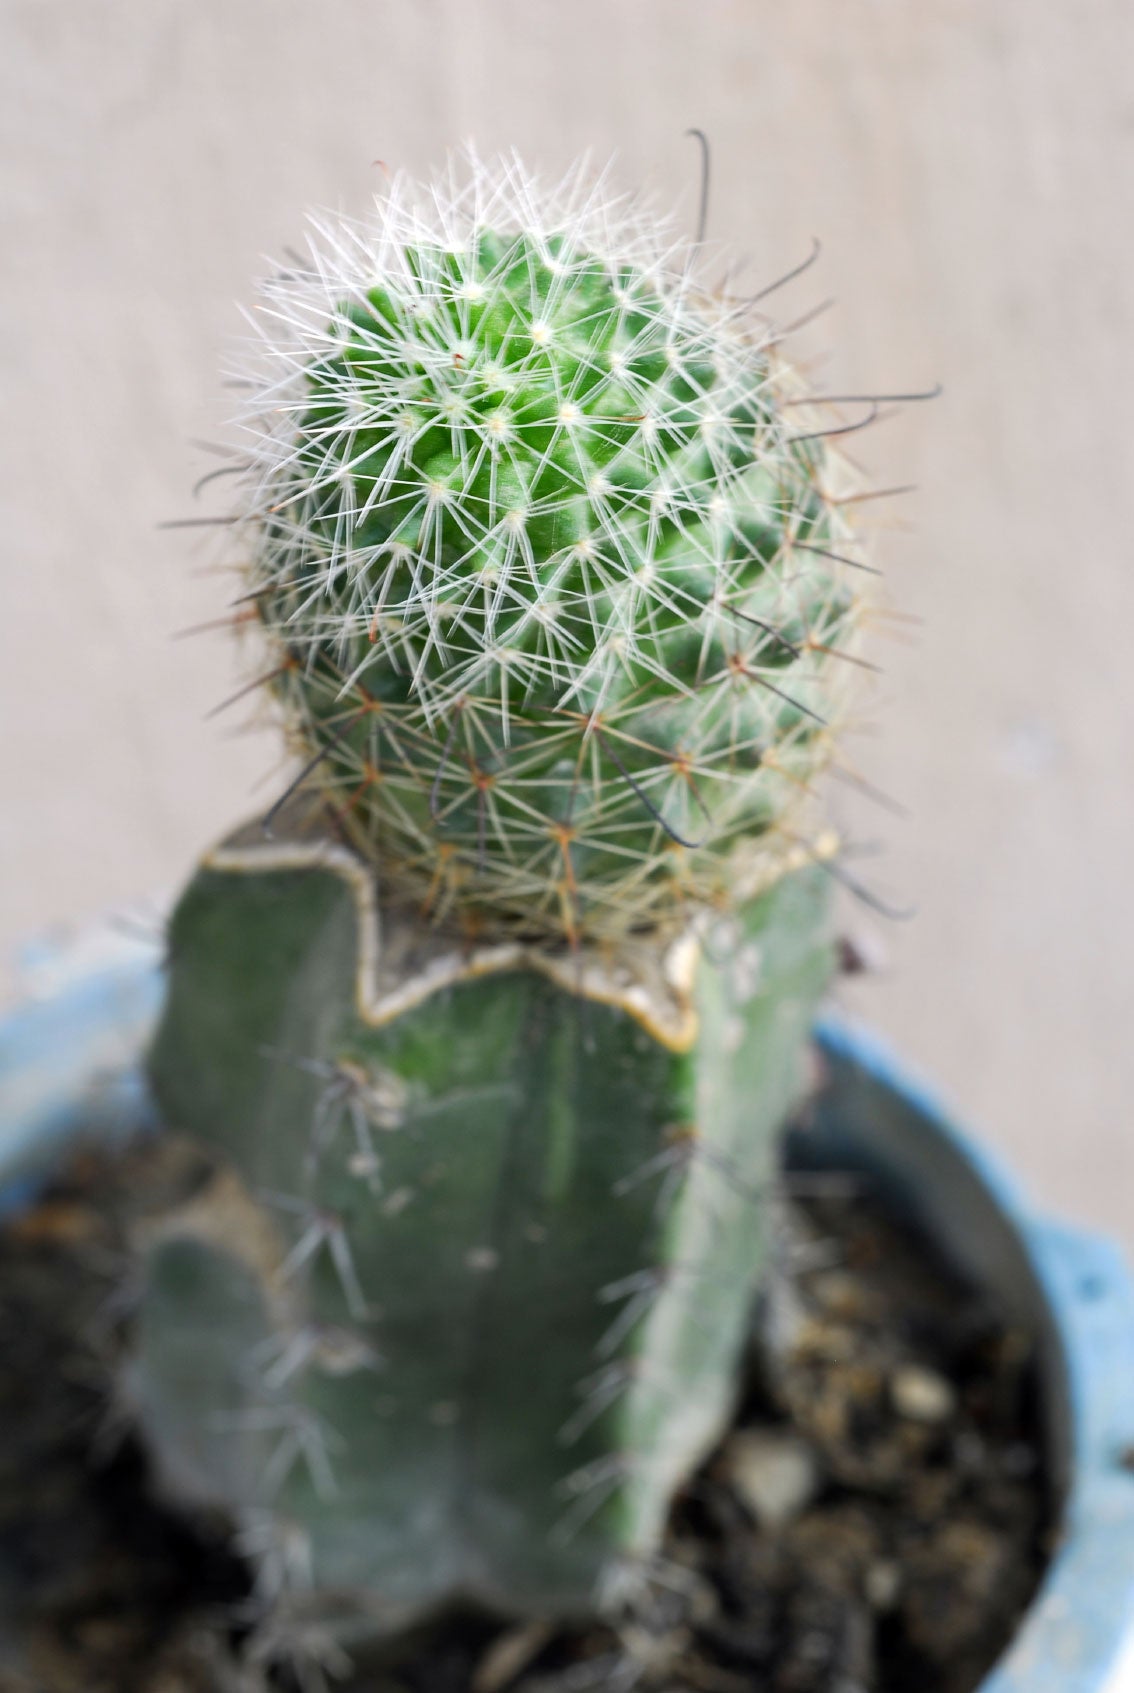 How to Graft Moon cactus